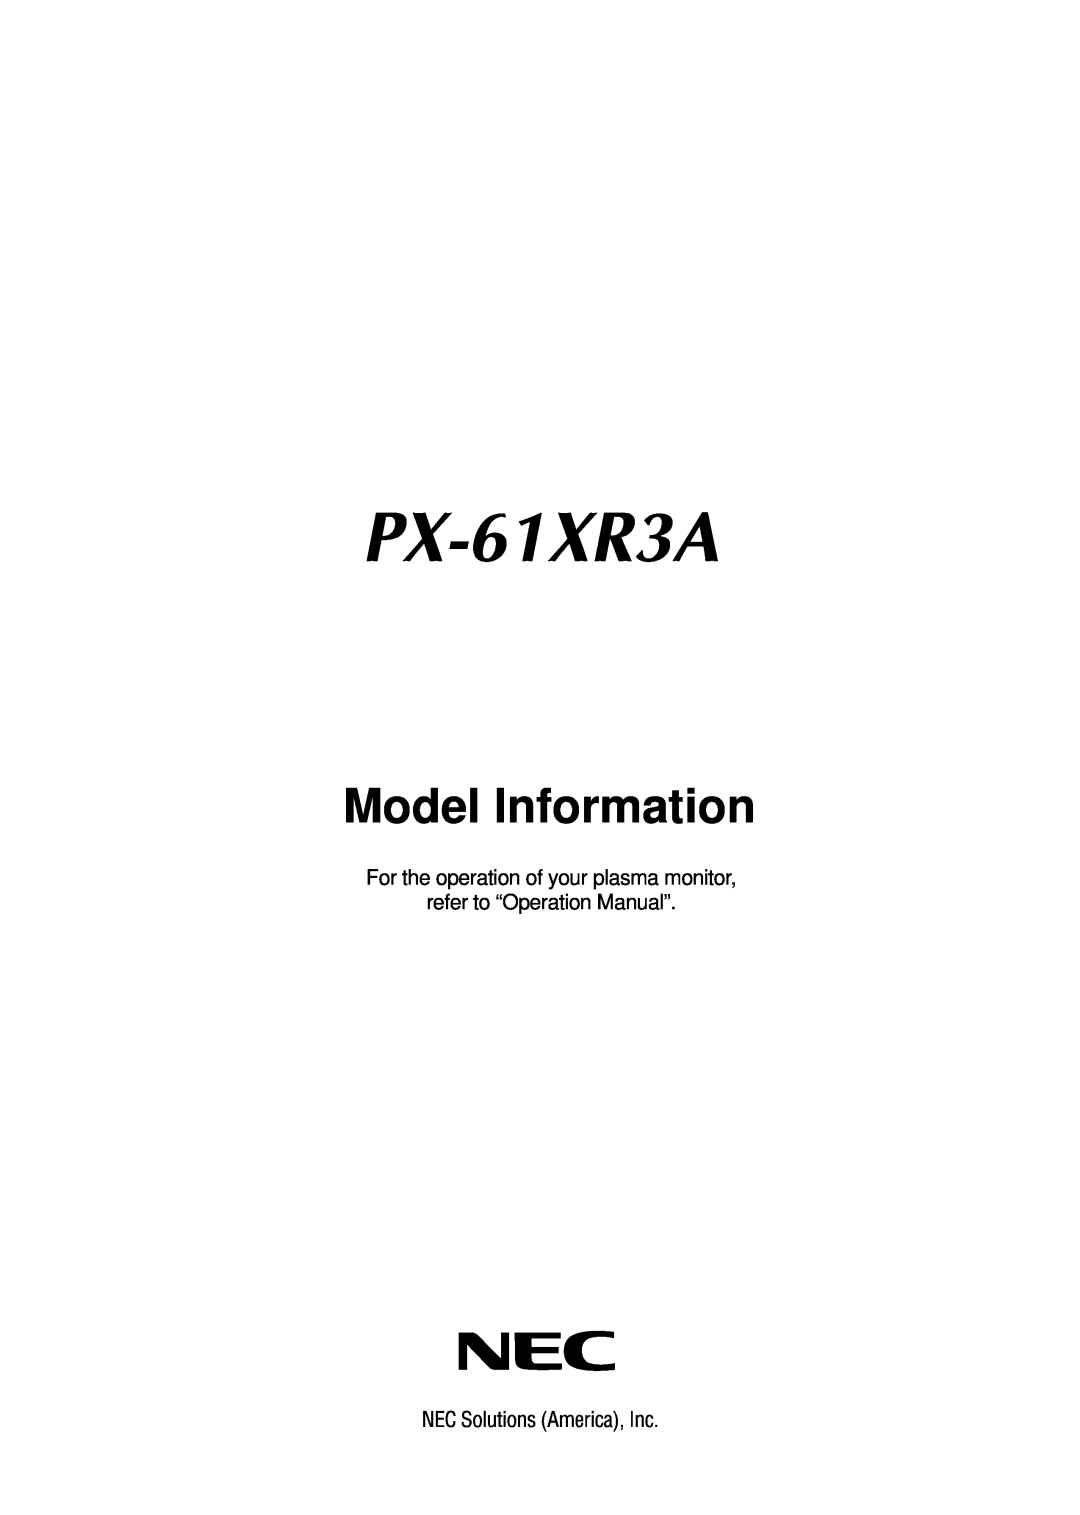 NEC PX-61XR3A operation manual Model Information, NEC Solutions America, Inc 